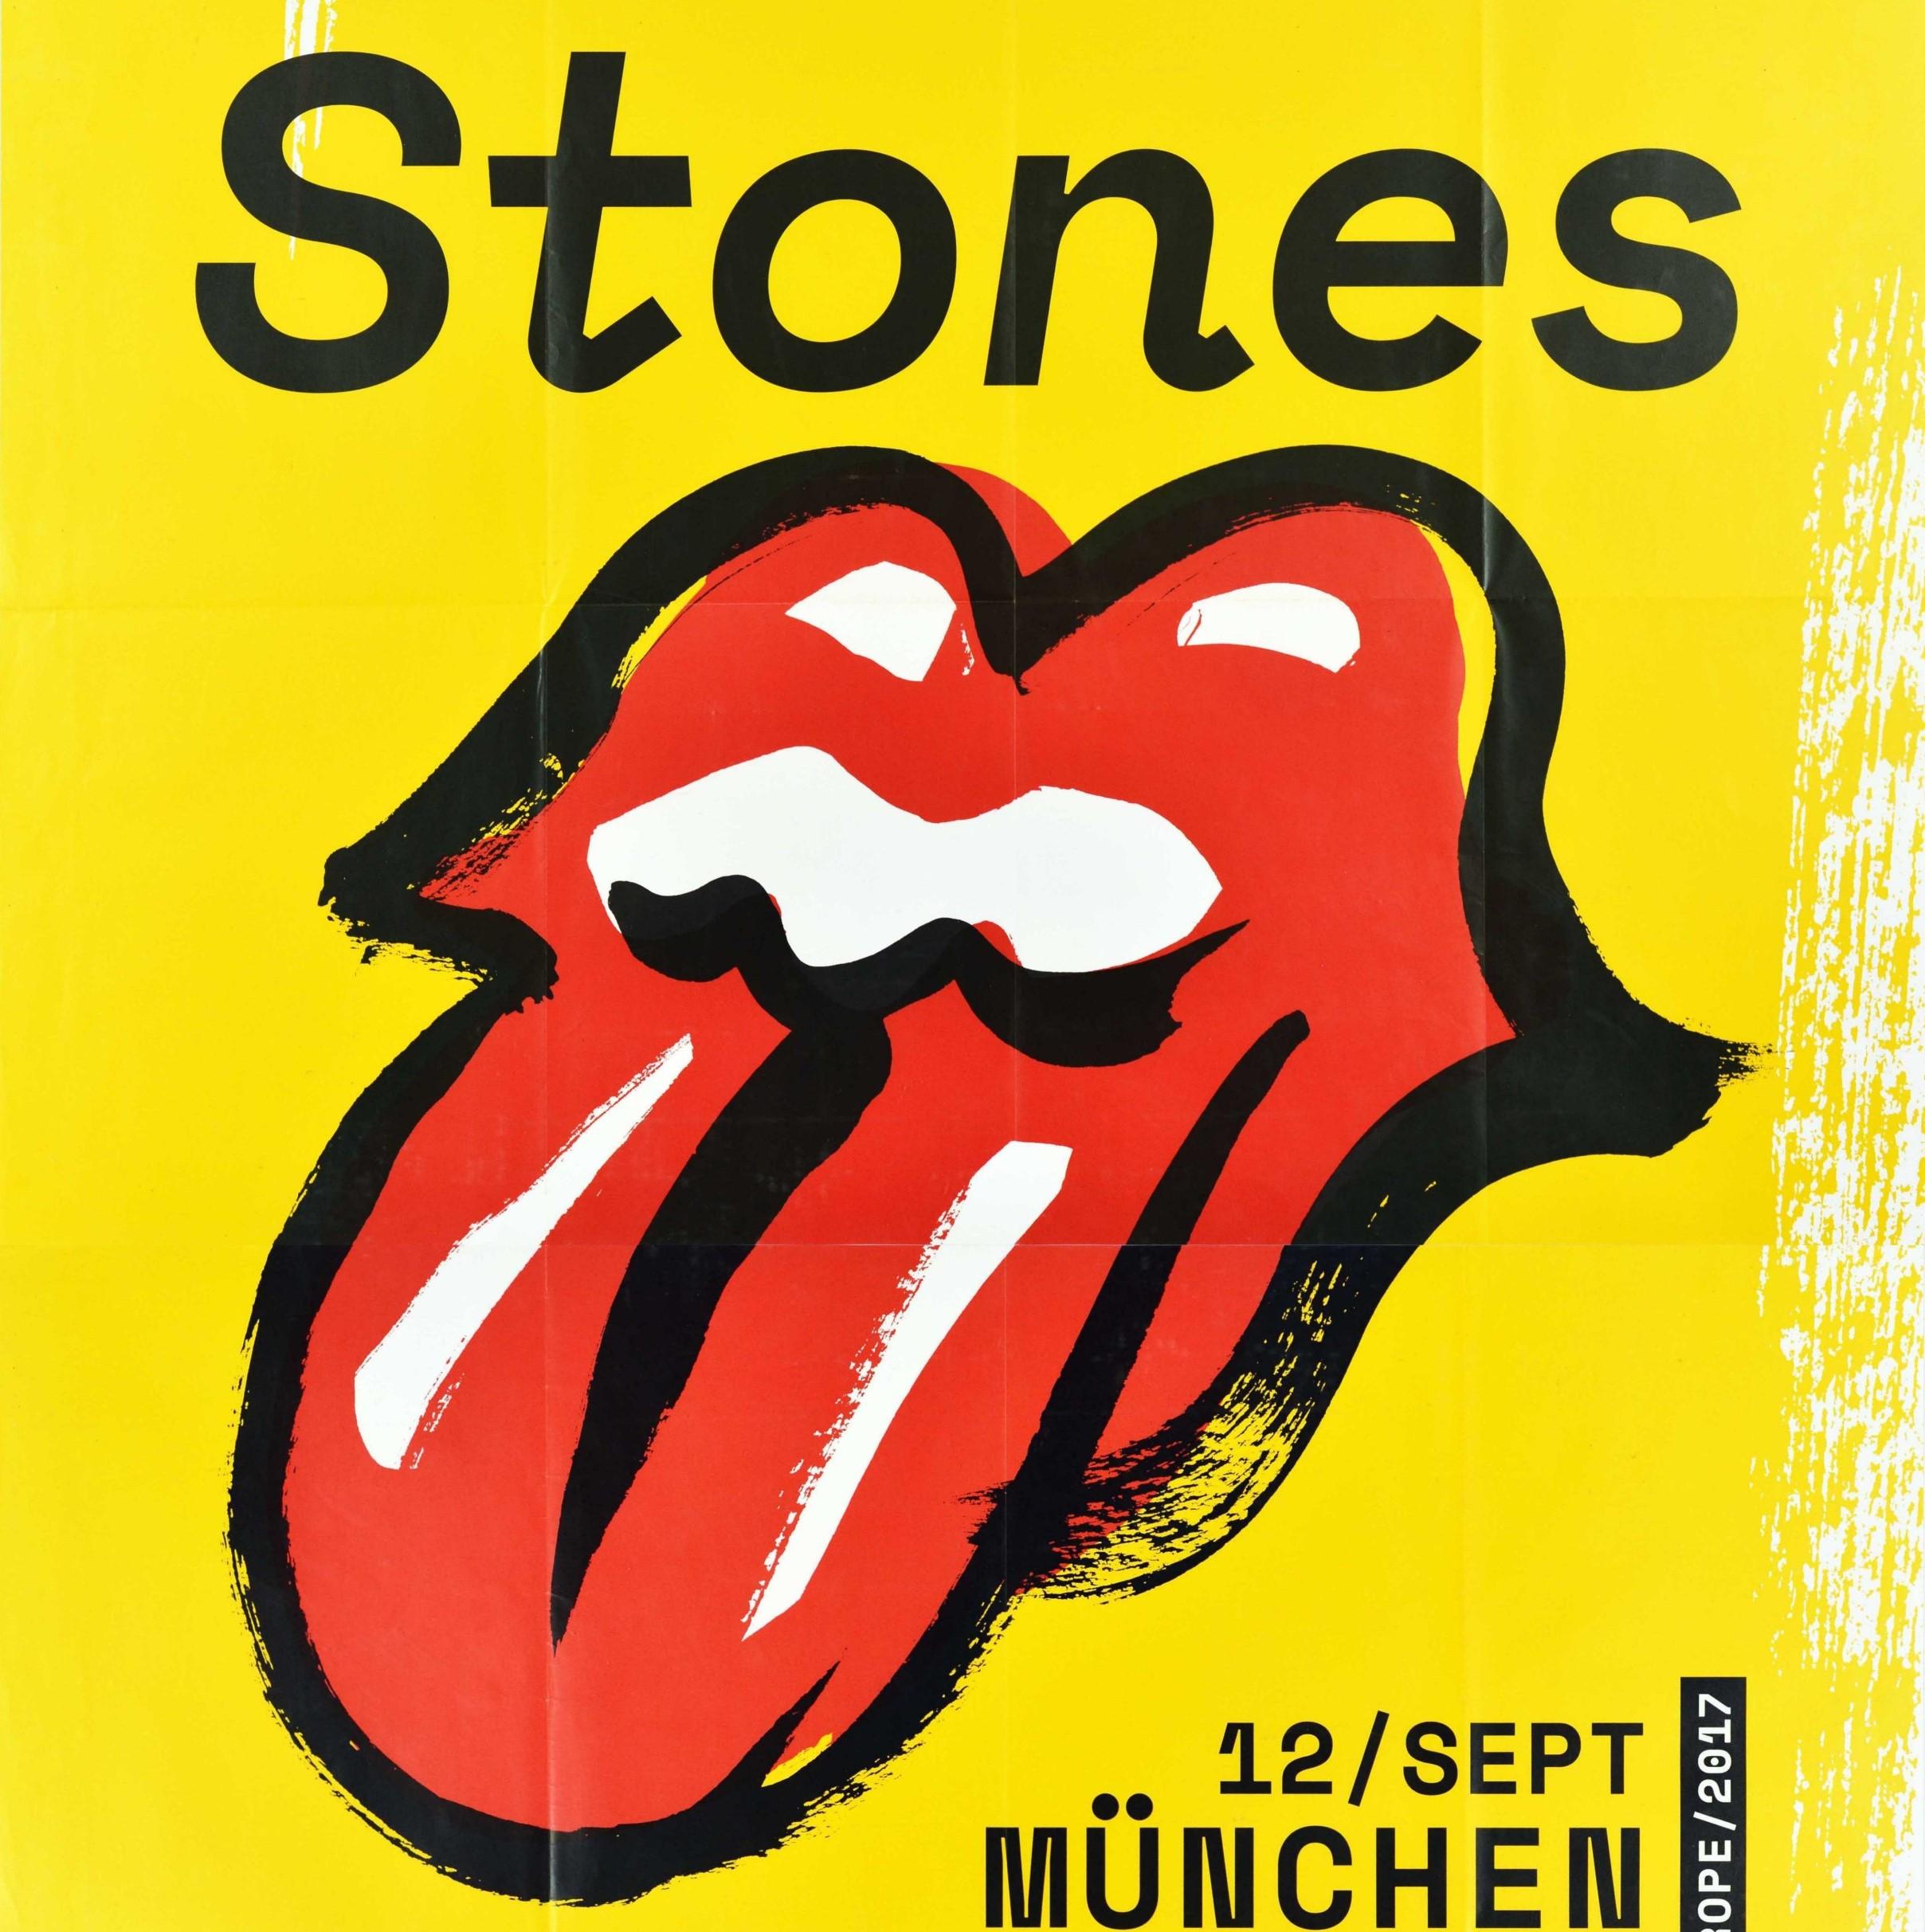 rolling stones concert poster